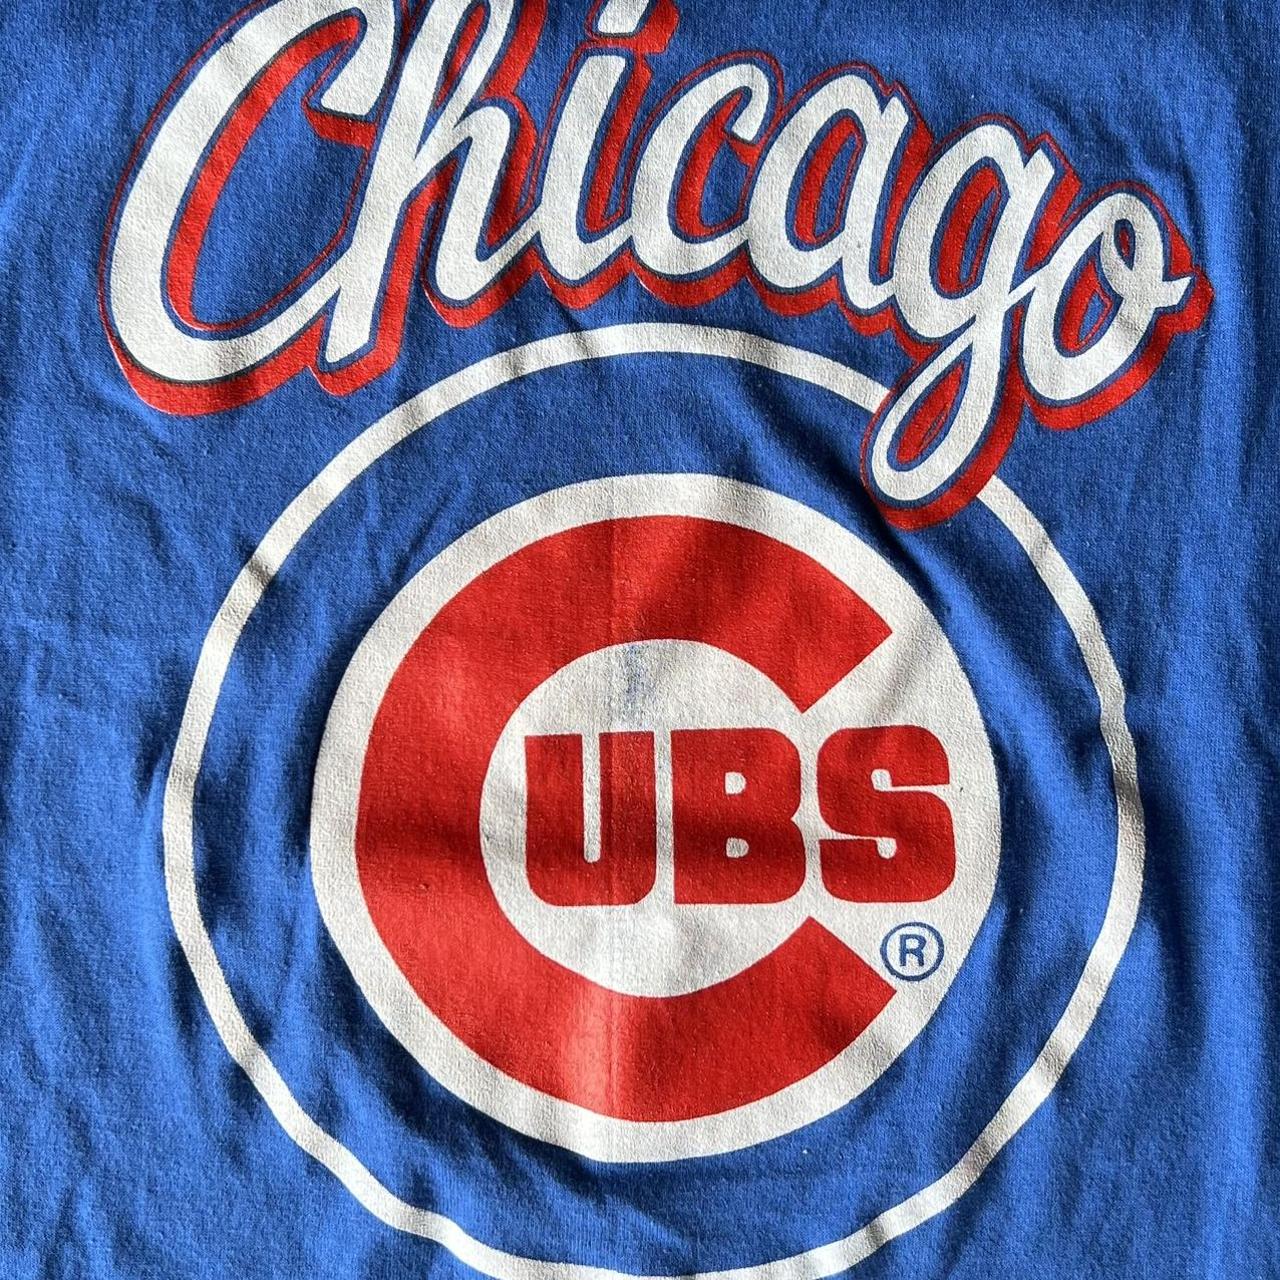 Women's medium Chicago Cubs shirt Authentic - Depop